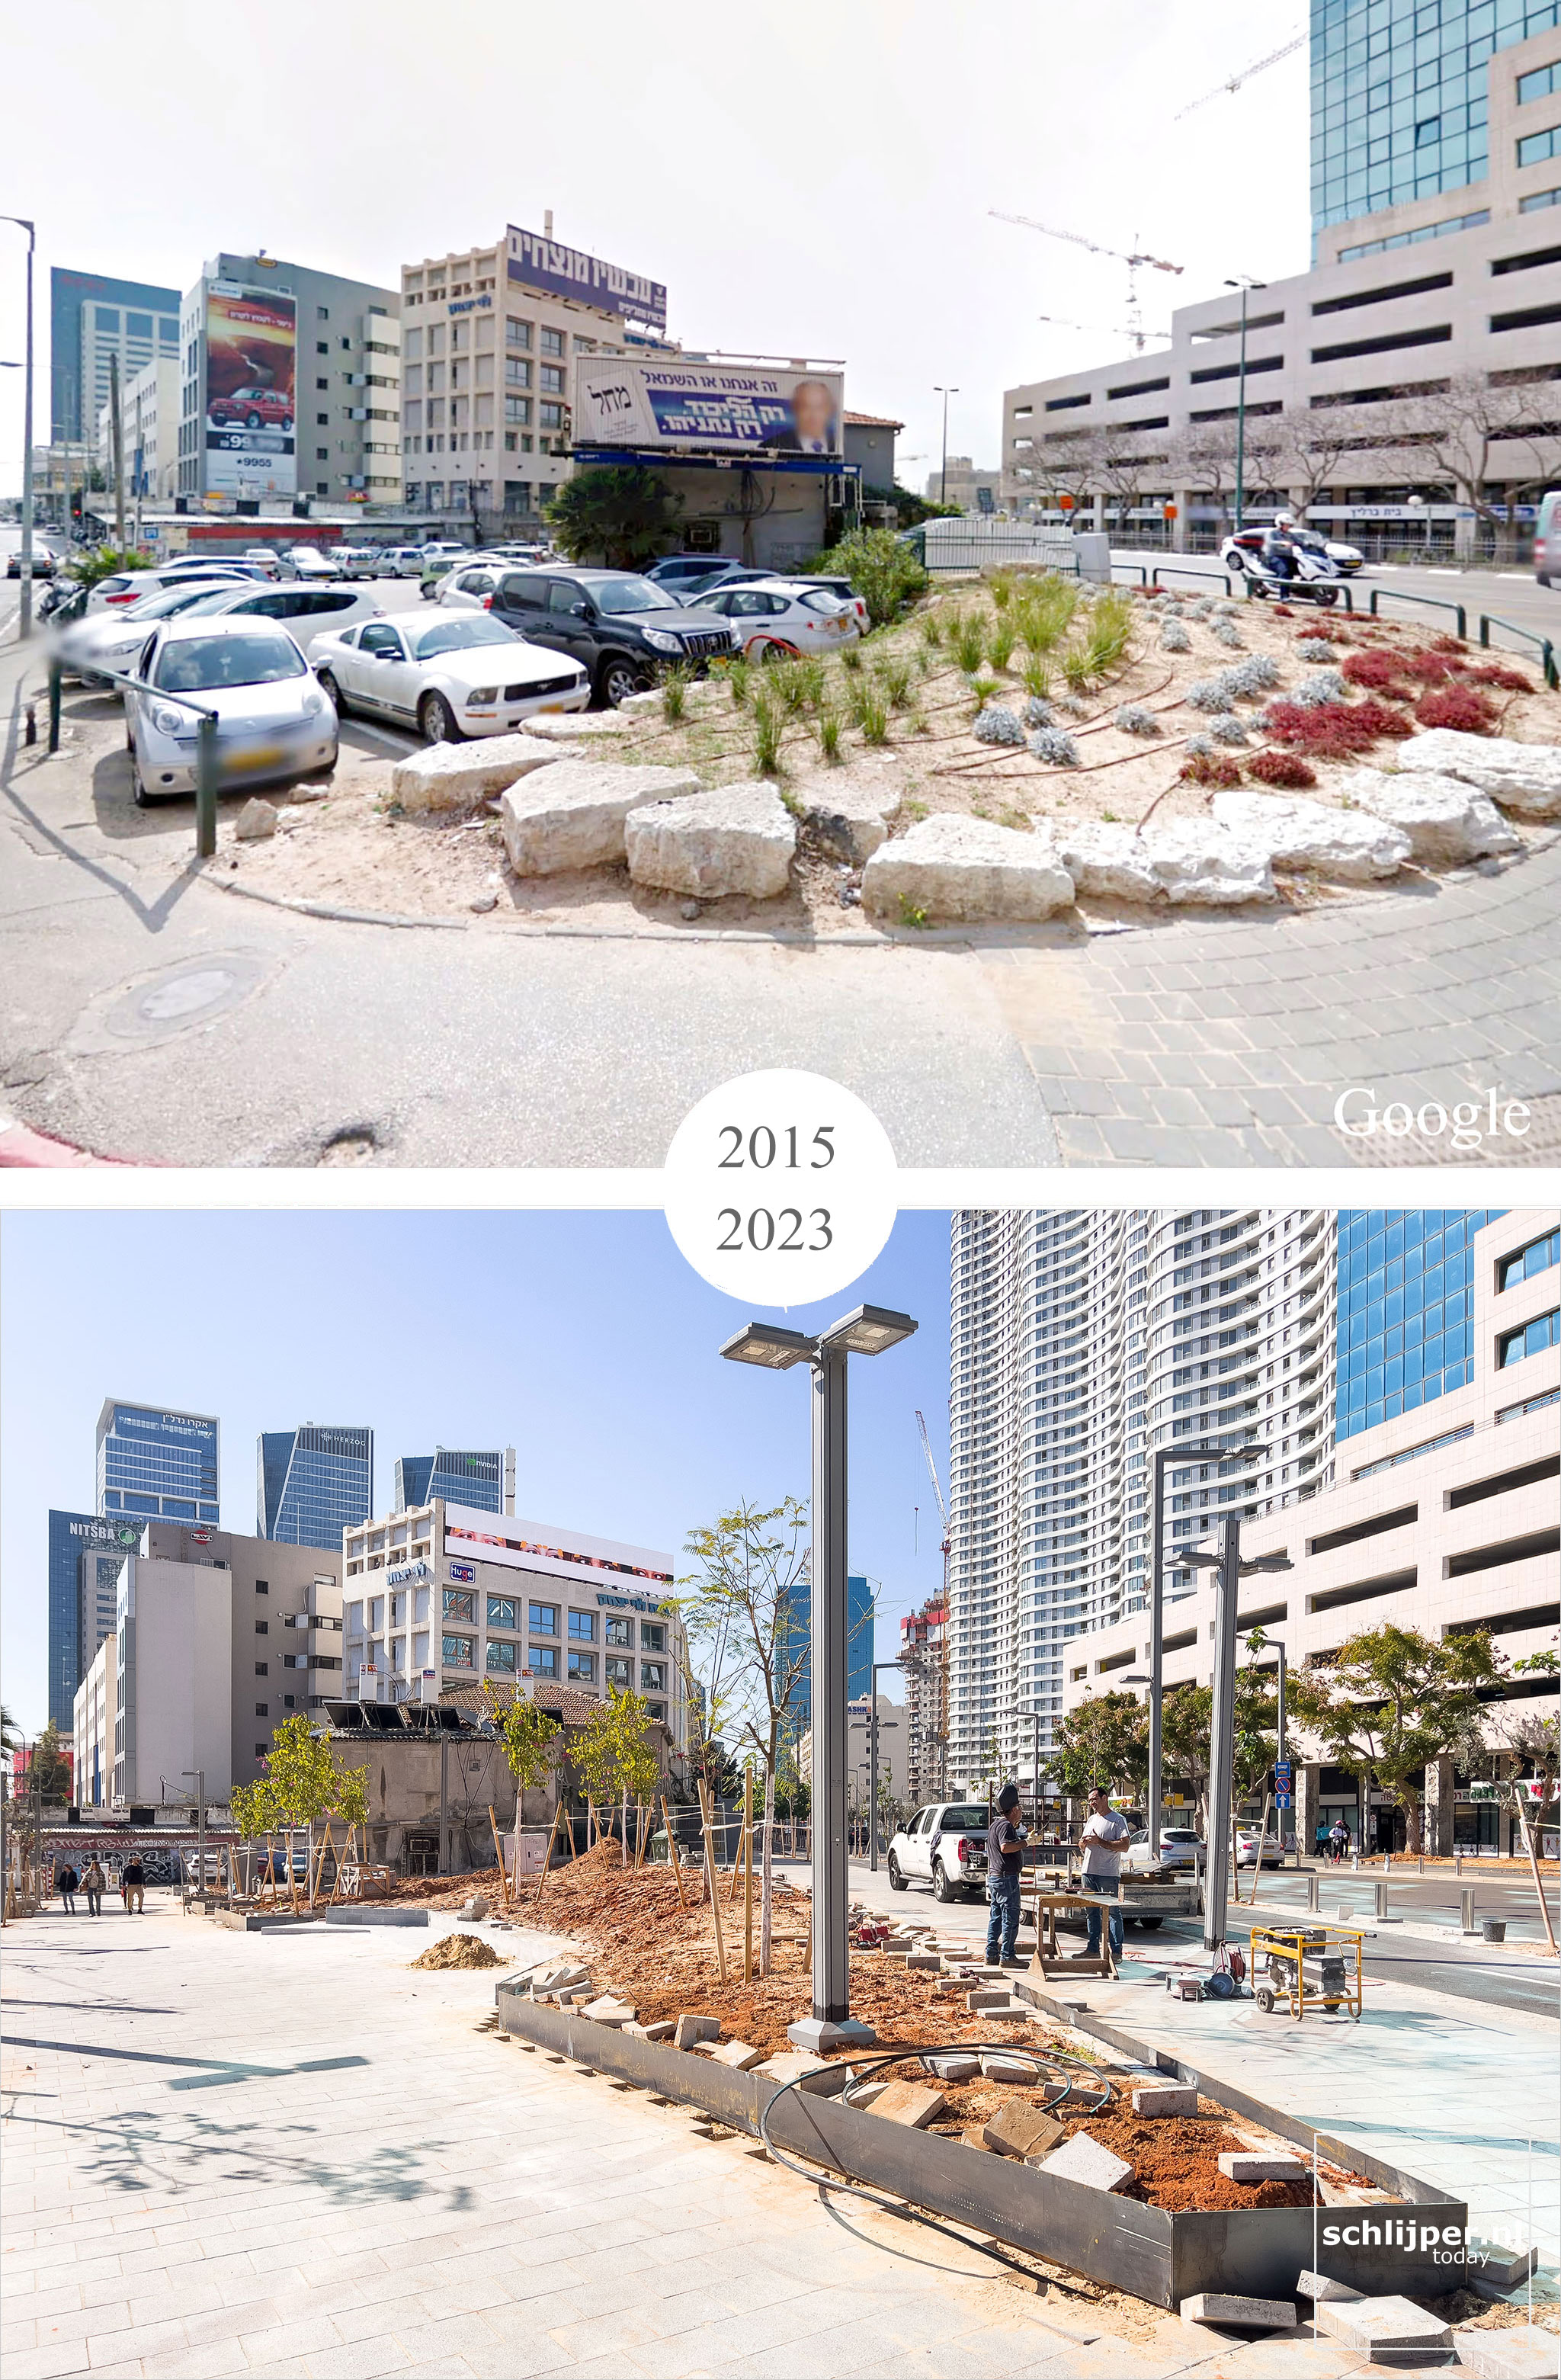 Israel, Tel Aviv, 2 january 2023